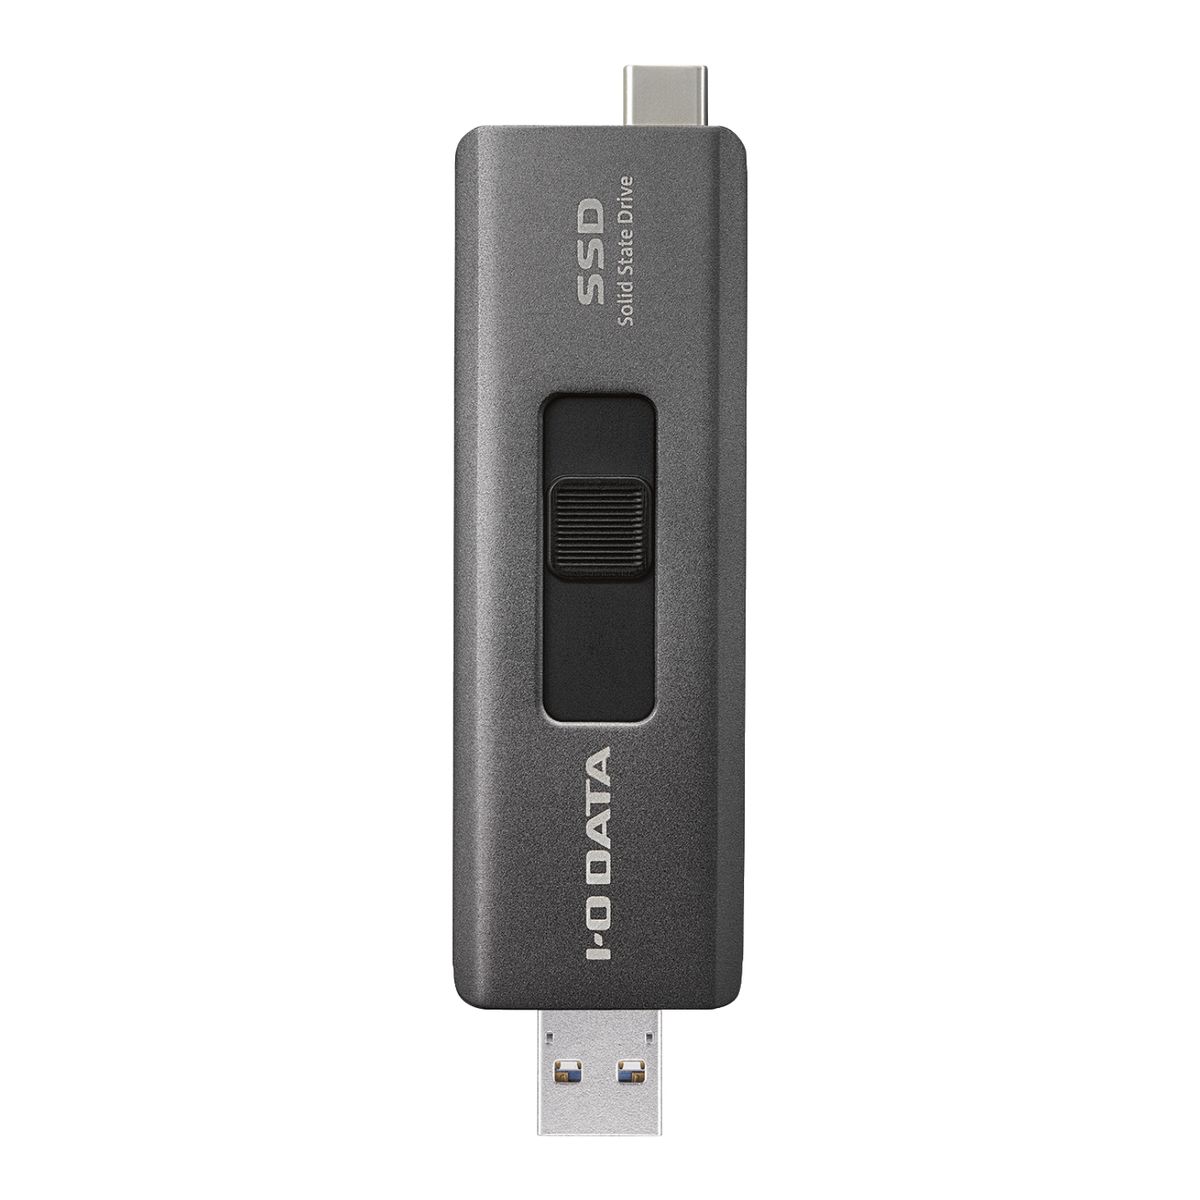 USB-A&USB-Cコネクター搭載 スティックSSD 500GB